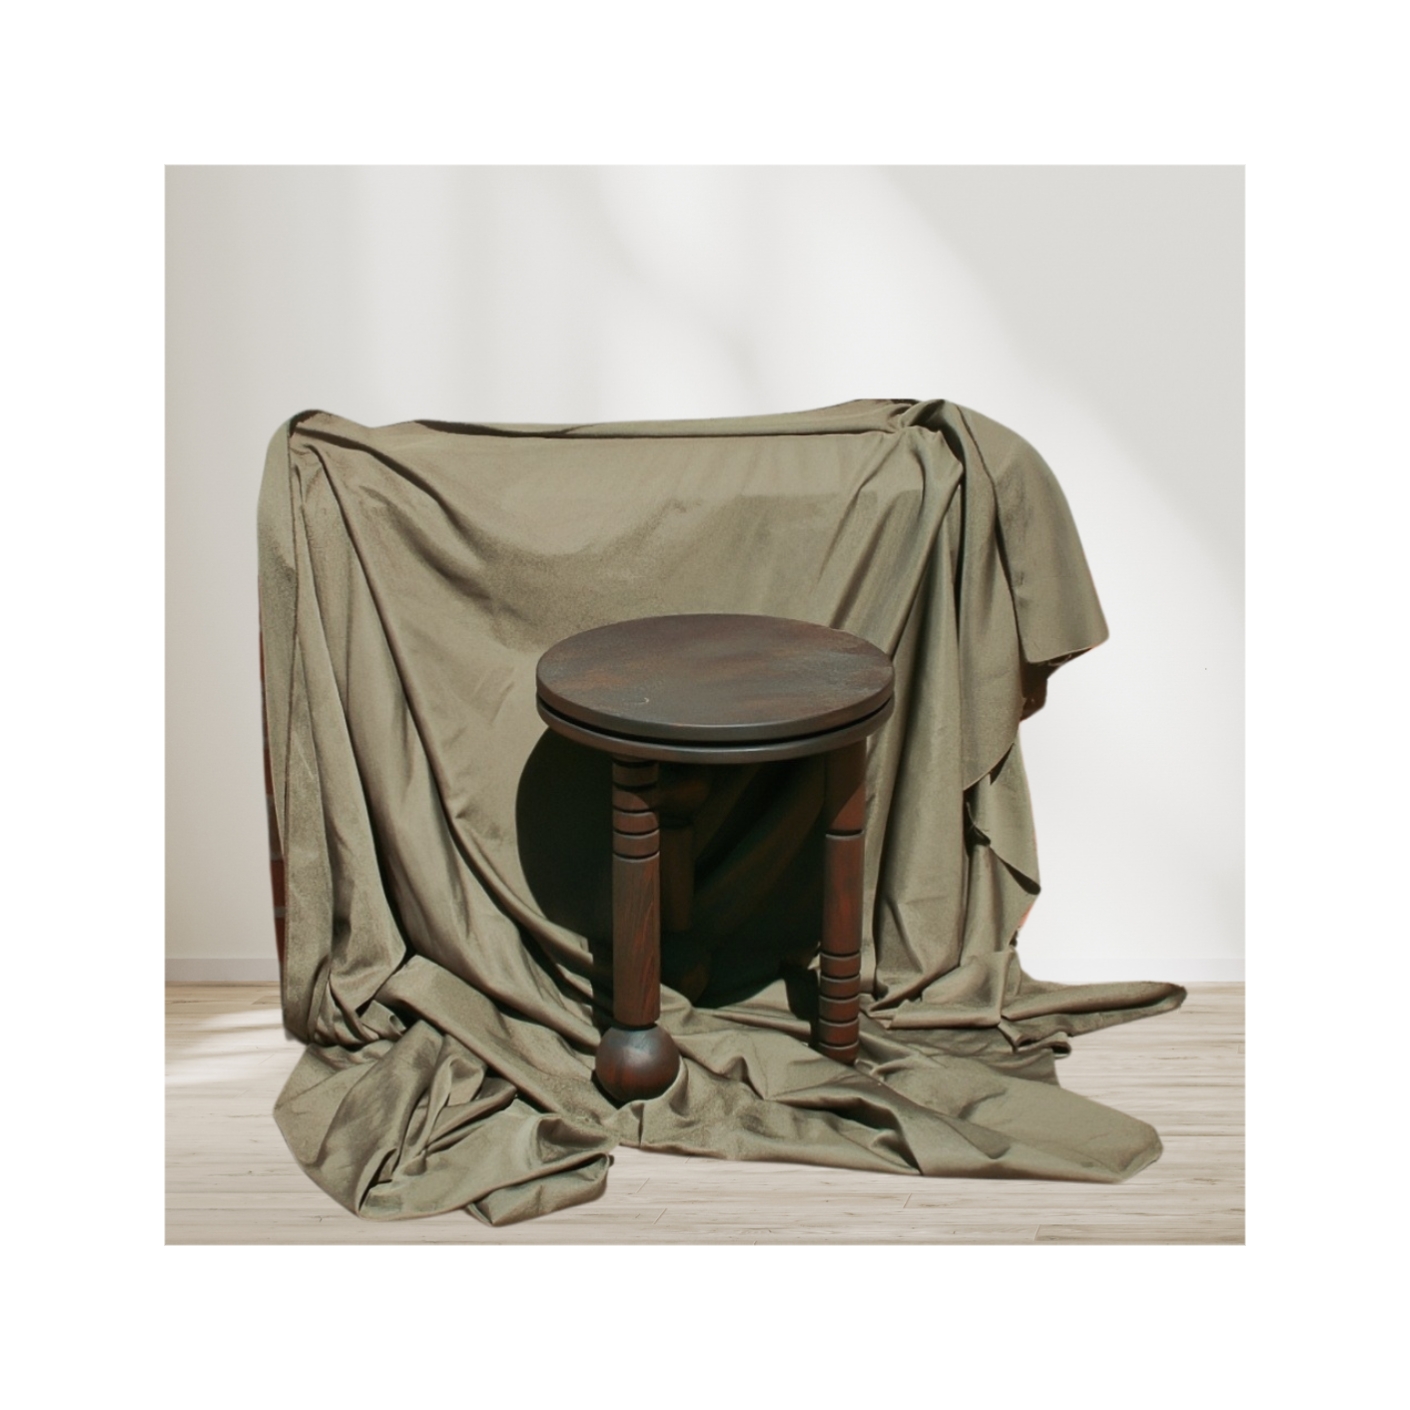 A stool made by Tobi Ashiru set against a drape.